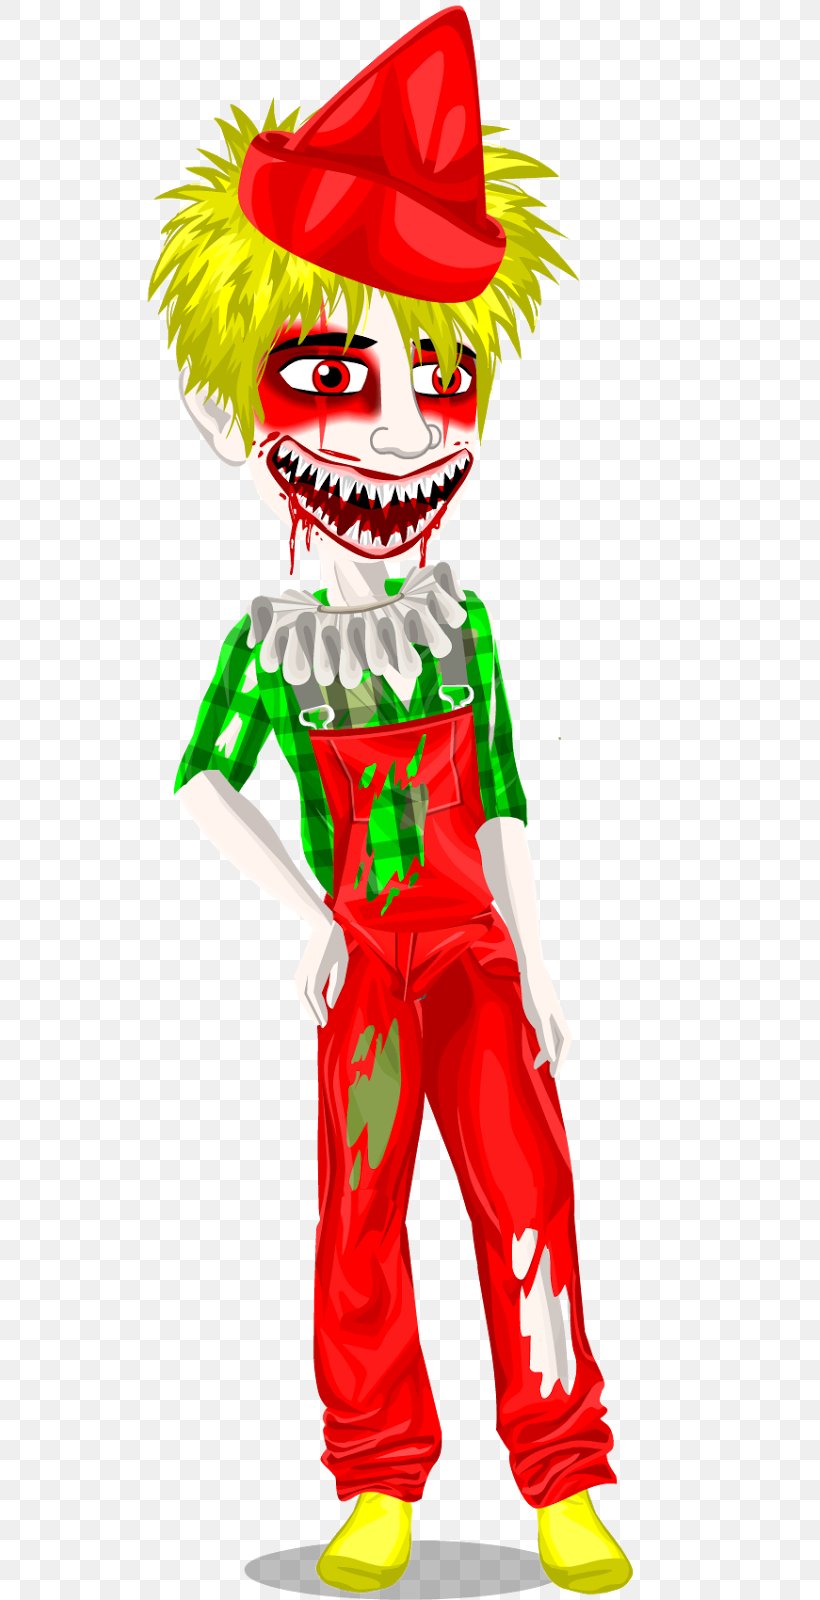 Clown Cartoon Costume Mascot Character, PNG, 531x1600px, Clown, Art, Cartoon, Character, Christmas Download Free